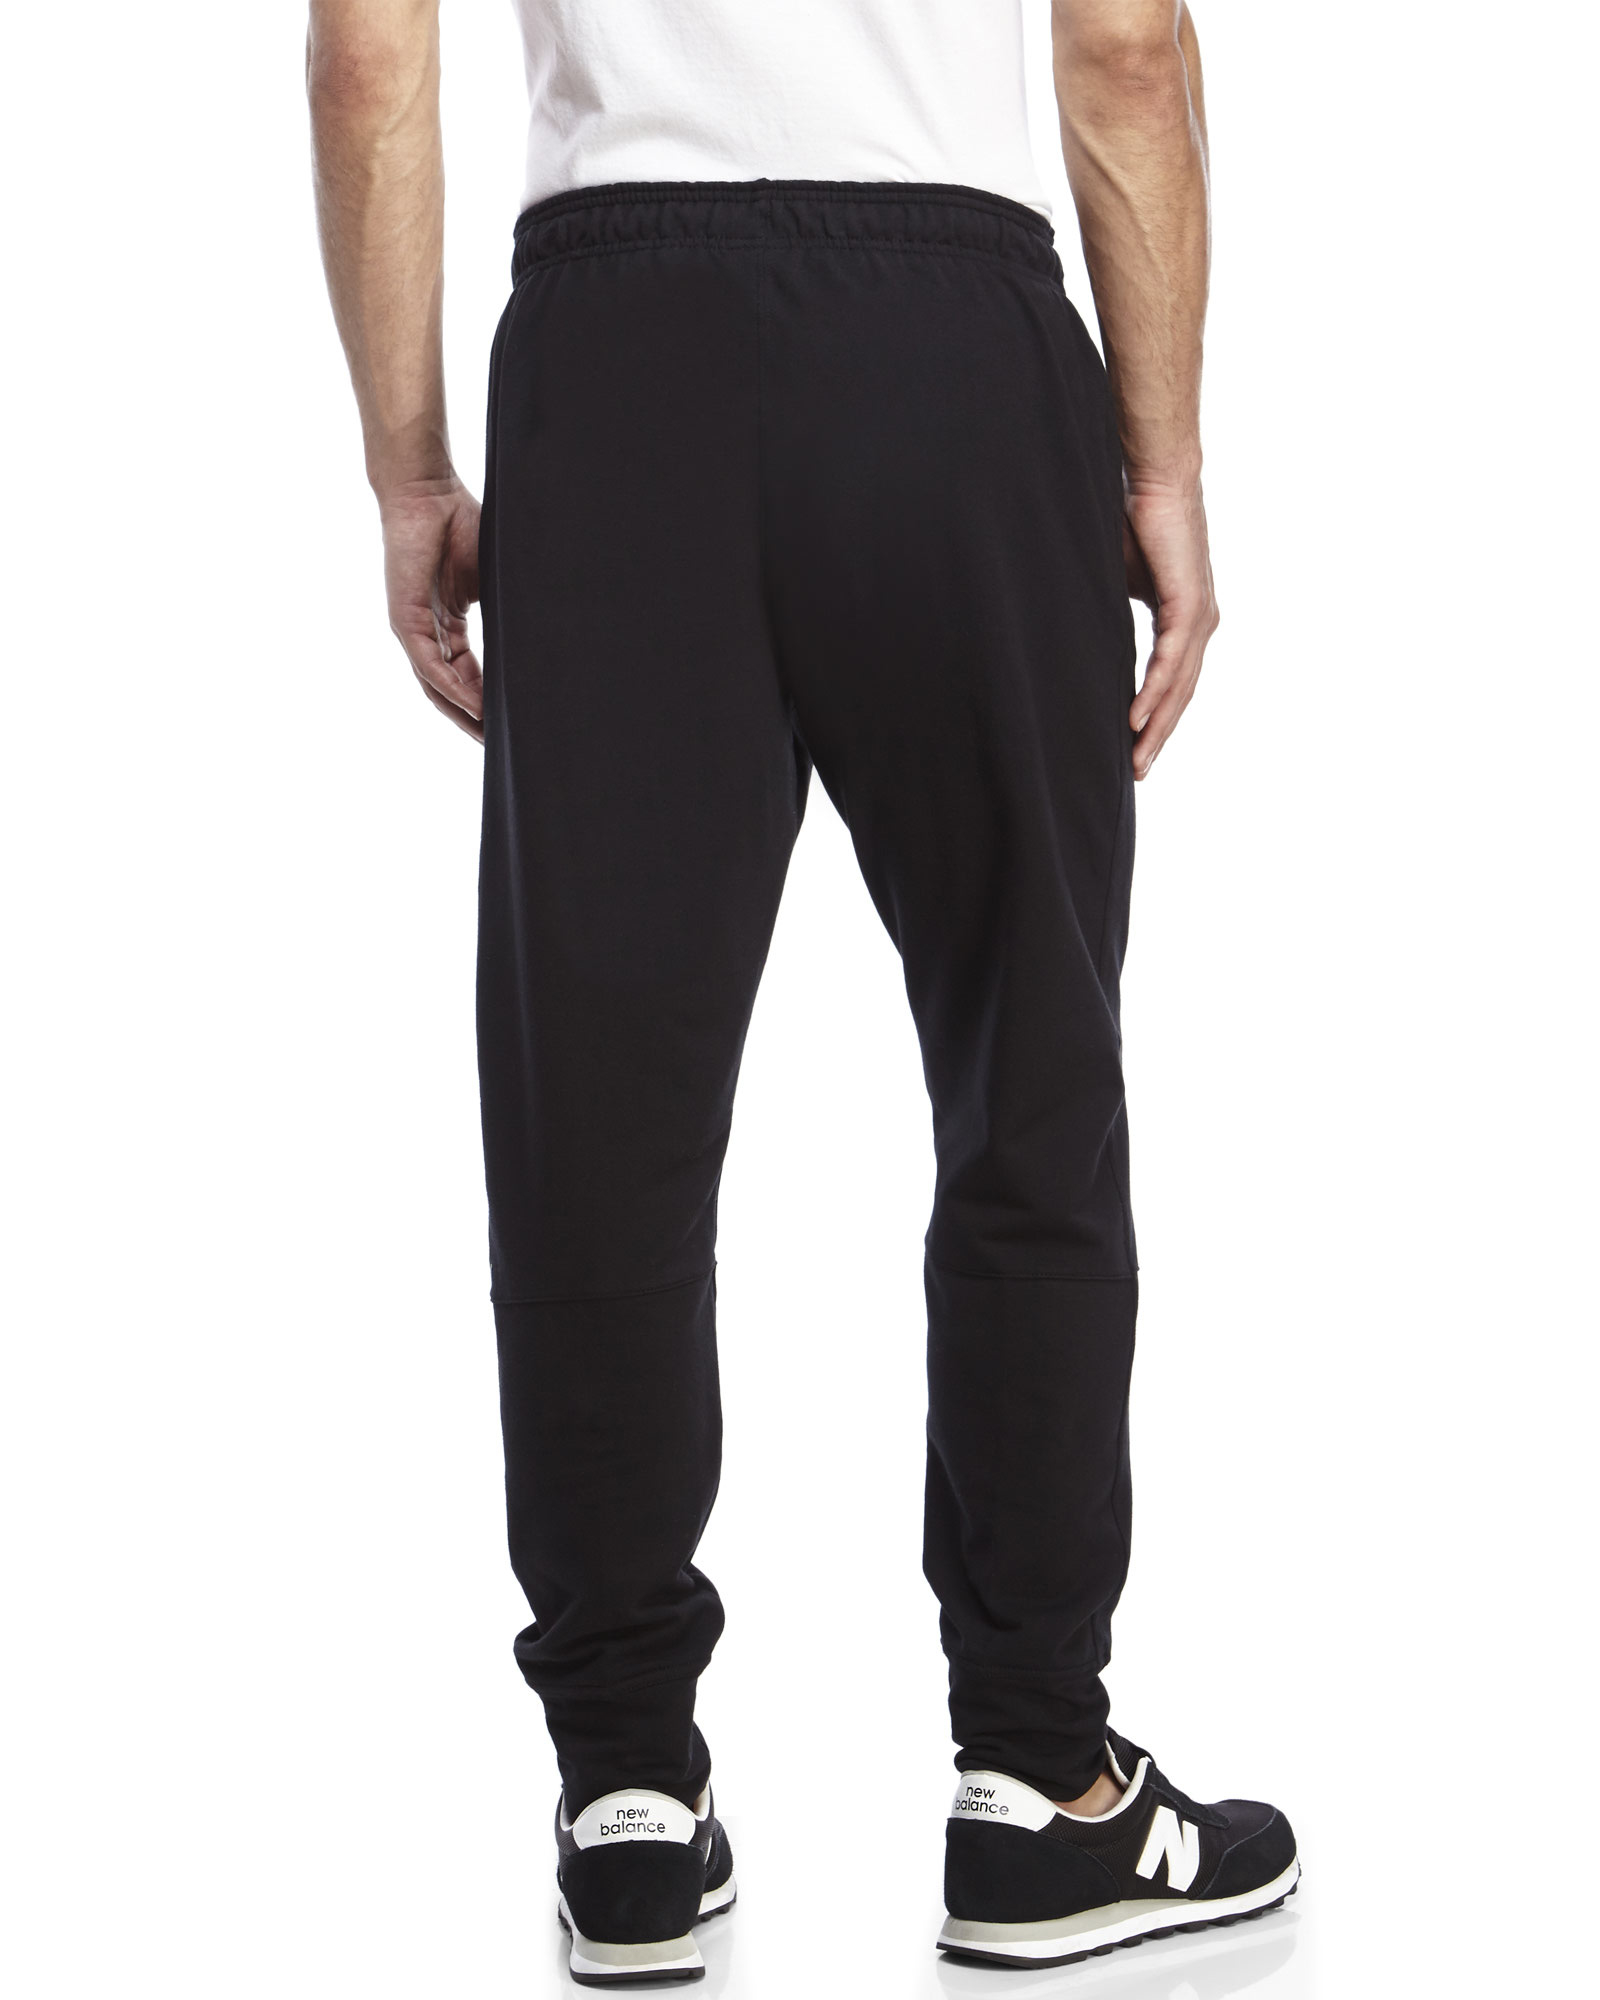 Lyst - Reebok Zip Pocket Sweatpants in Black for Men